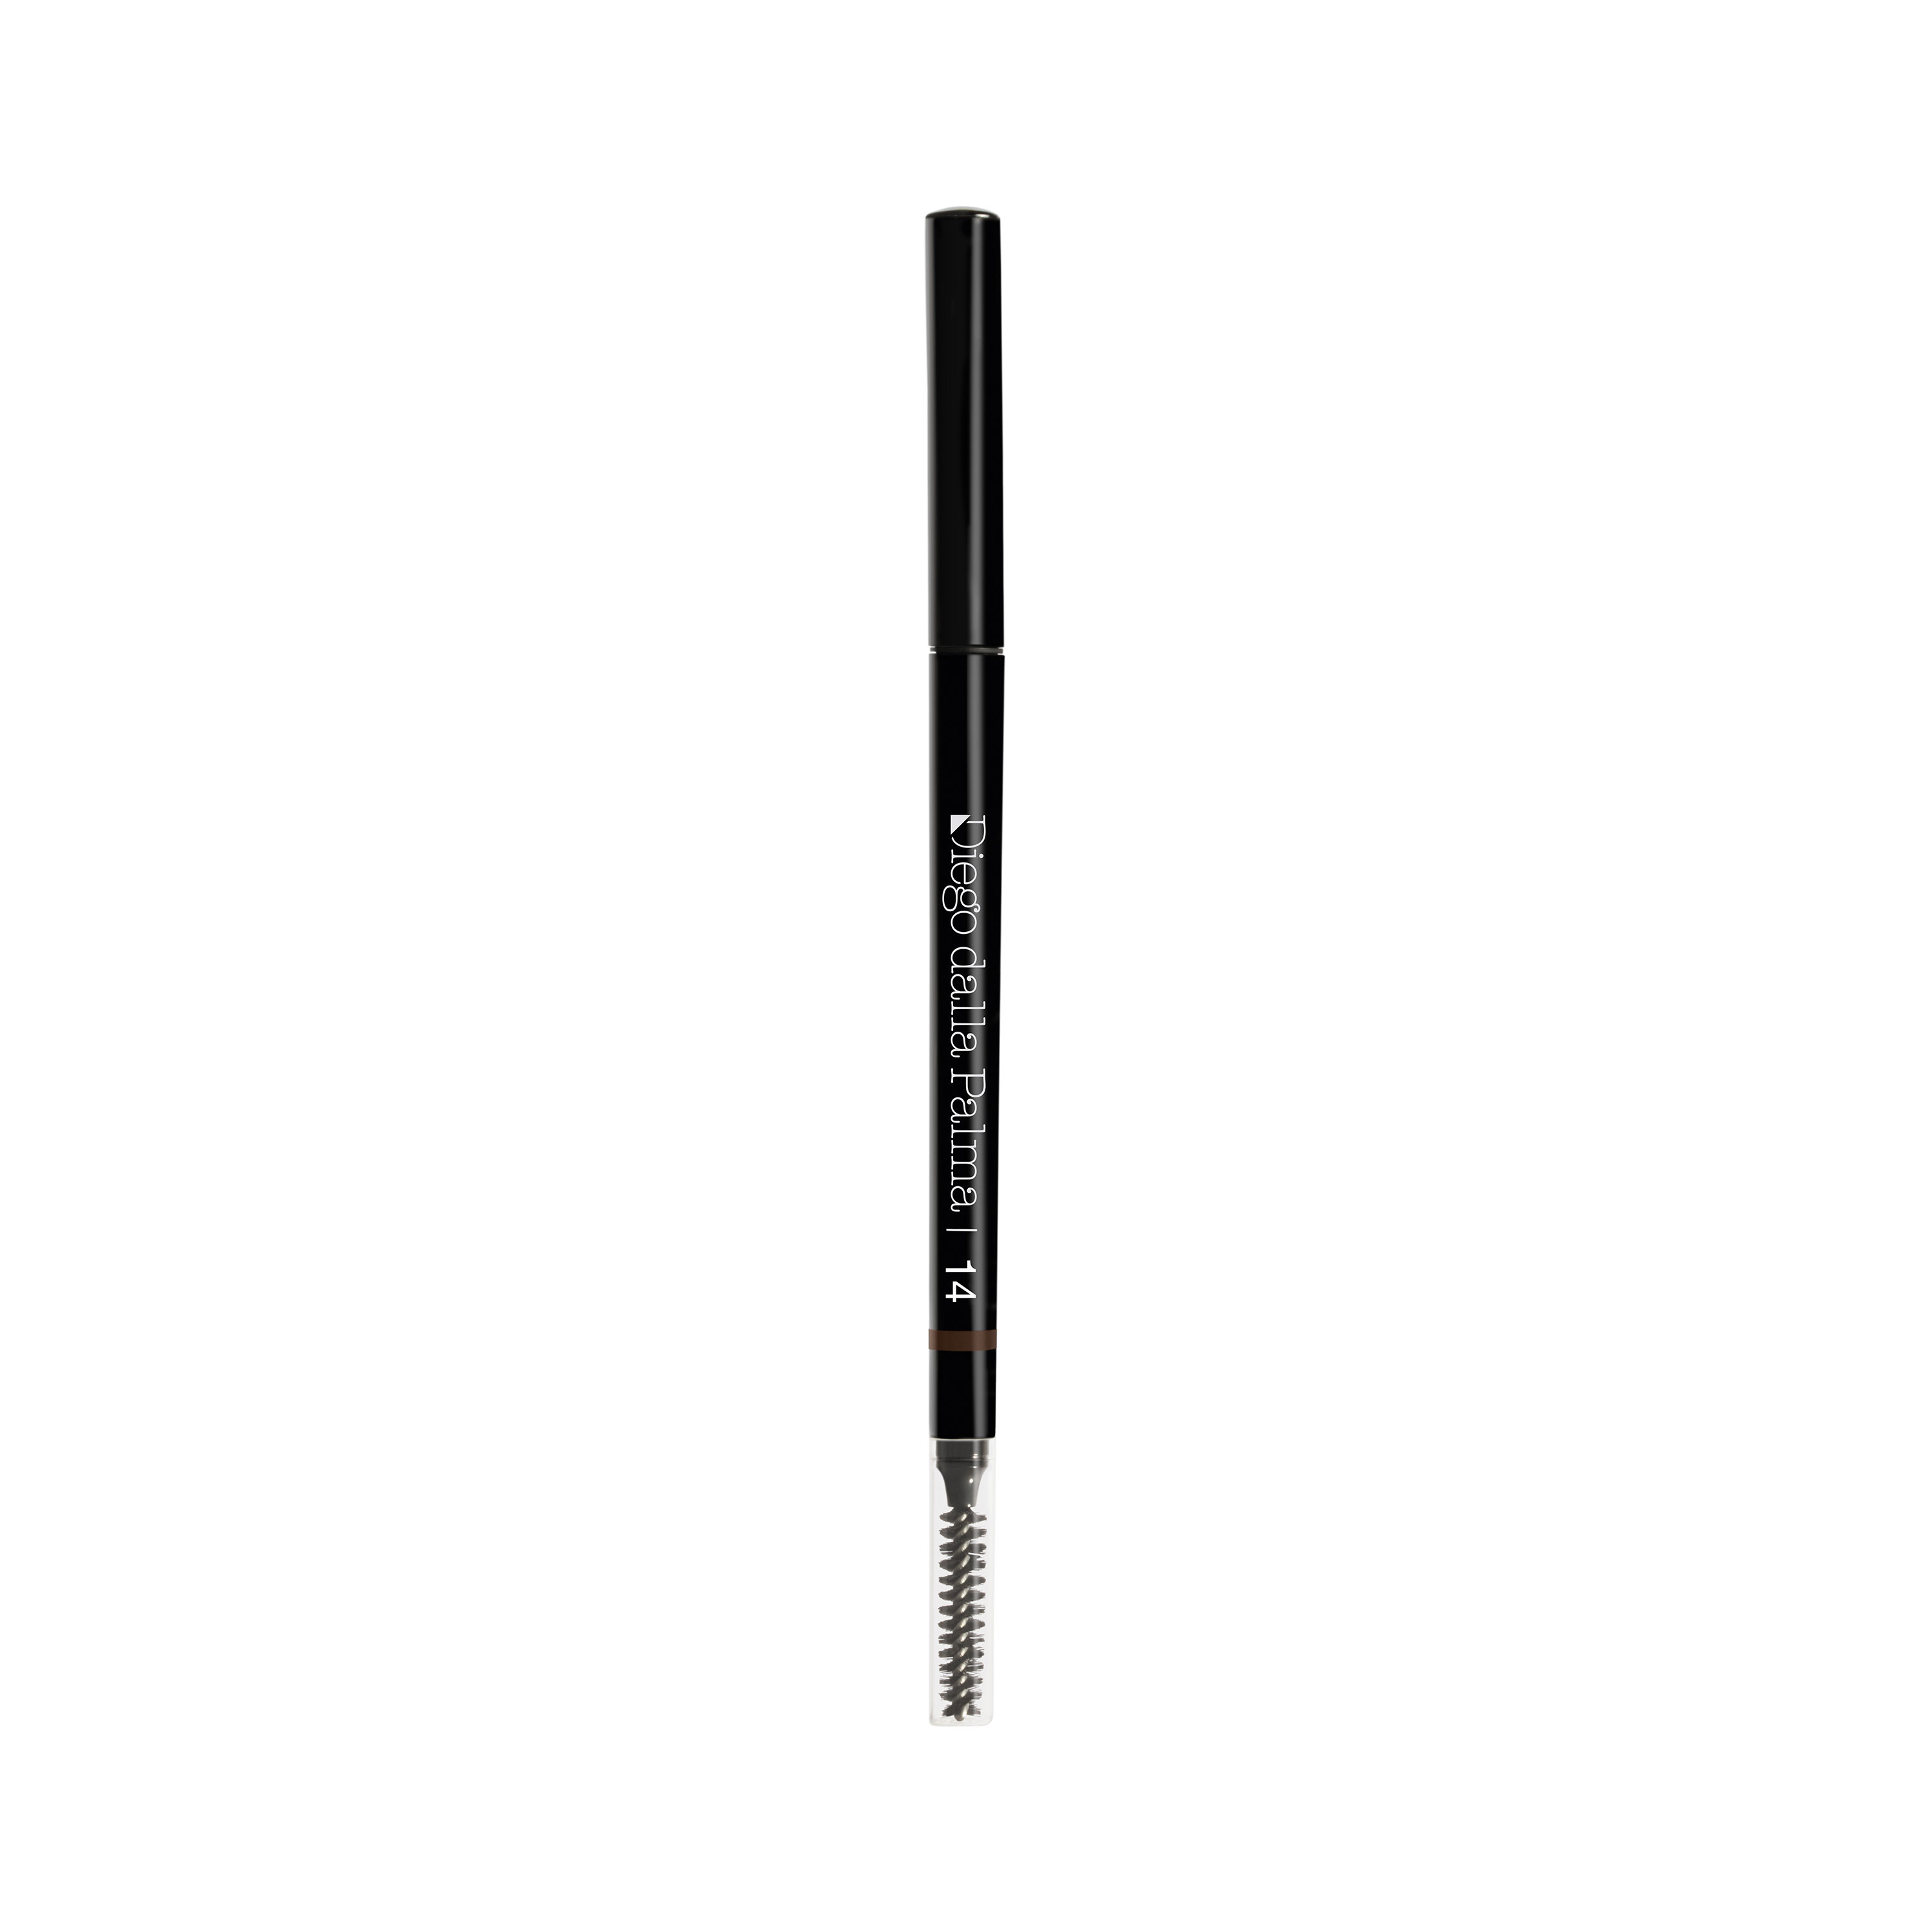 High Precision Long Lasting Eyebrow Pencil - 14 smoke black, Black, large image number 1